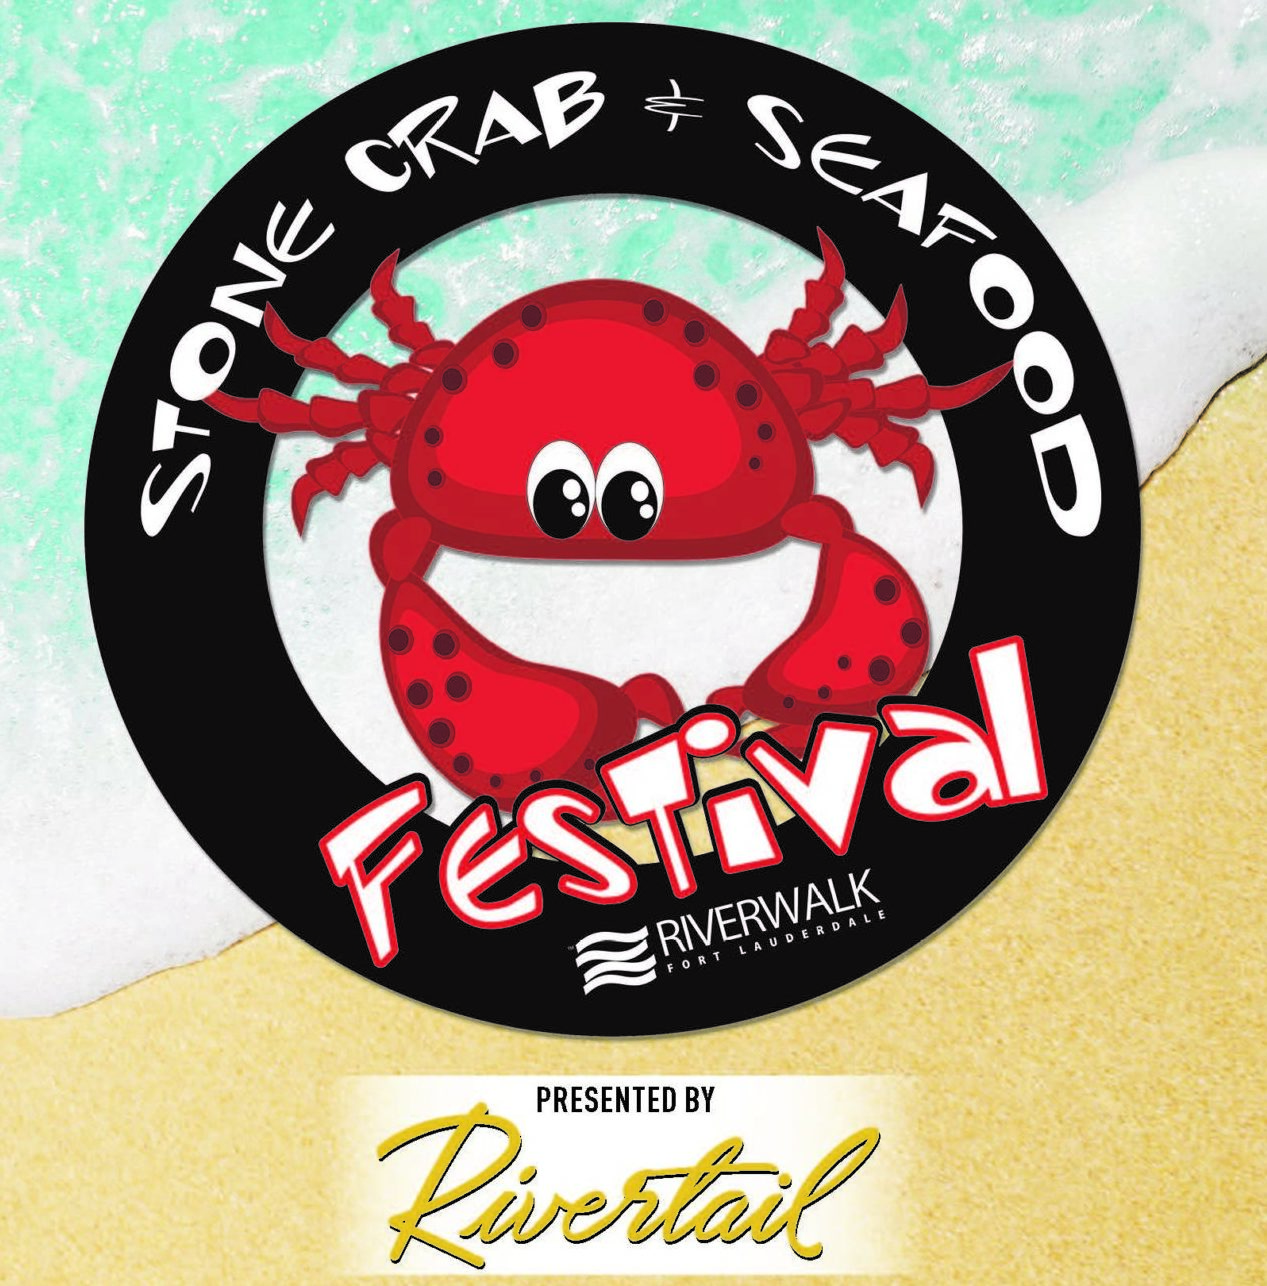 12th Annual Riverwalk Stone Crab & Seafood Festival